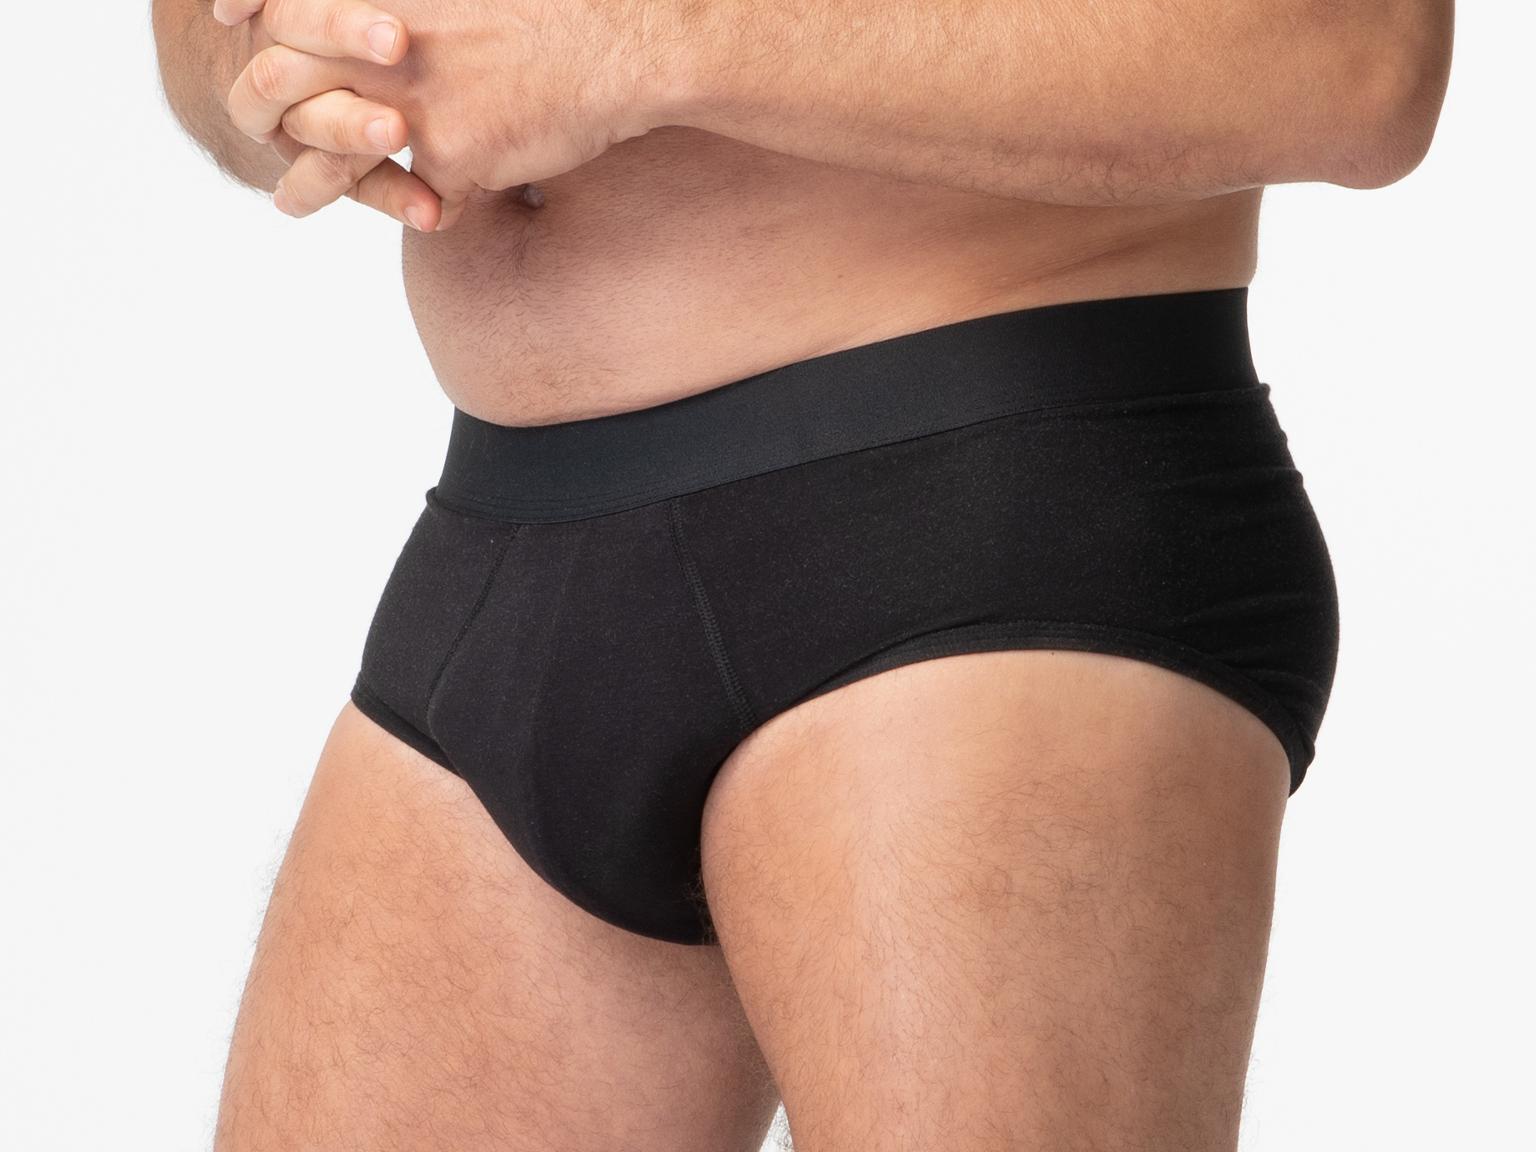  Mens Incontinence Underwear Washable Bladder Control